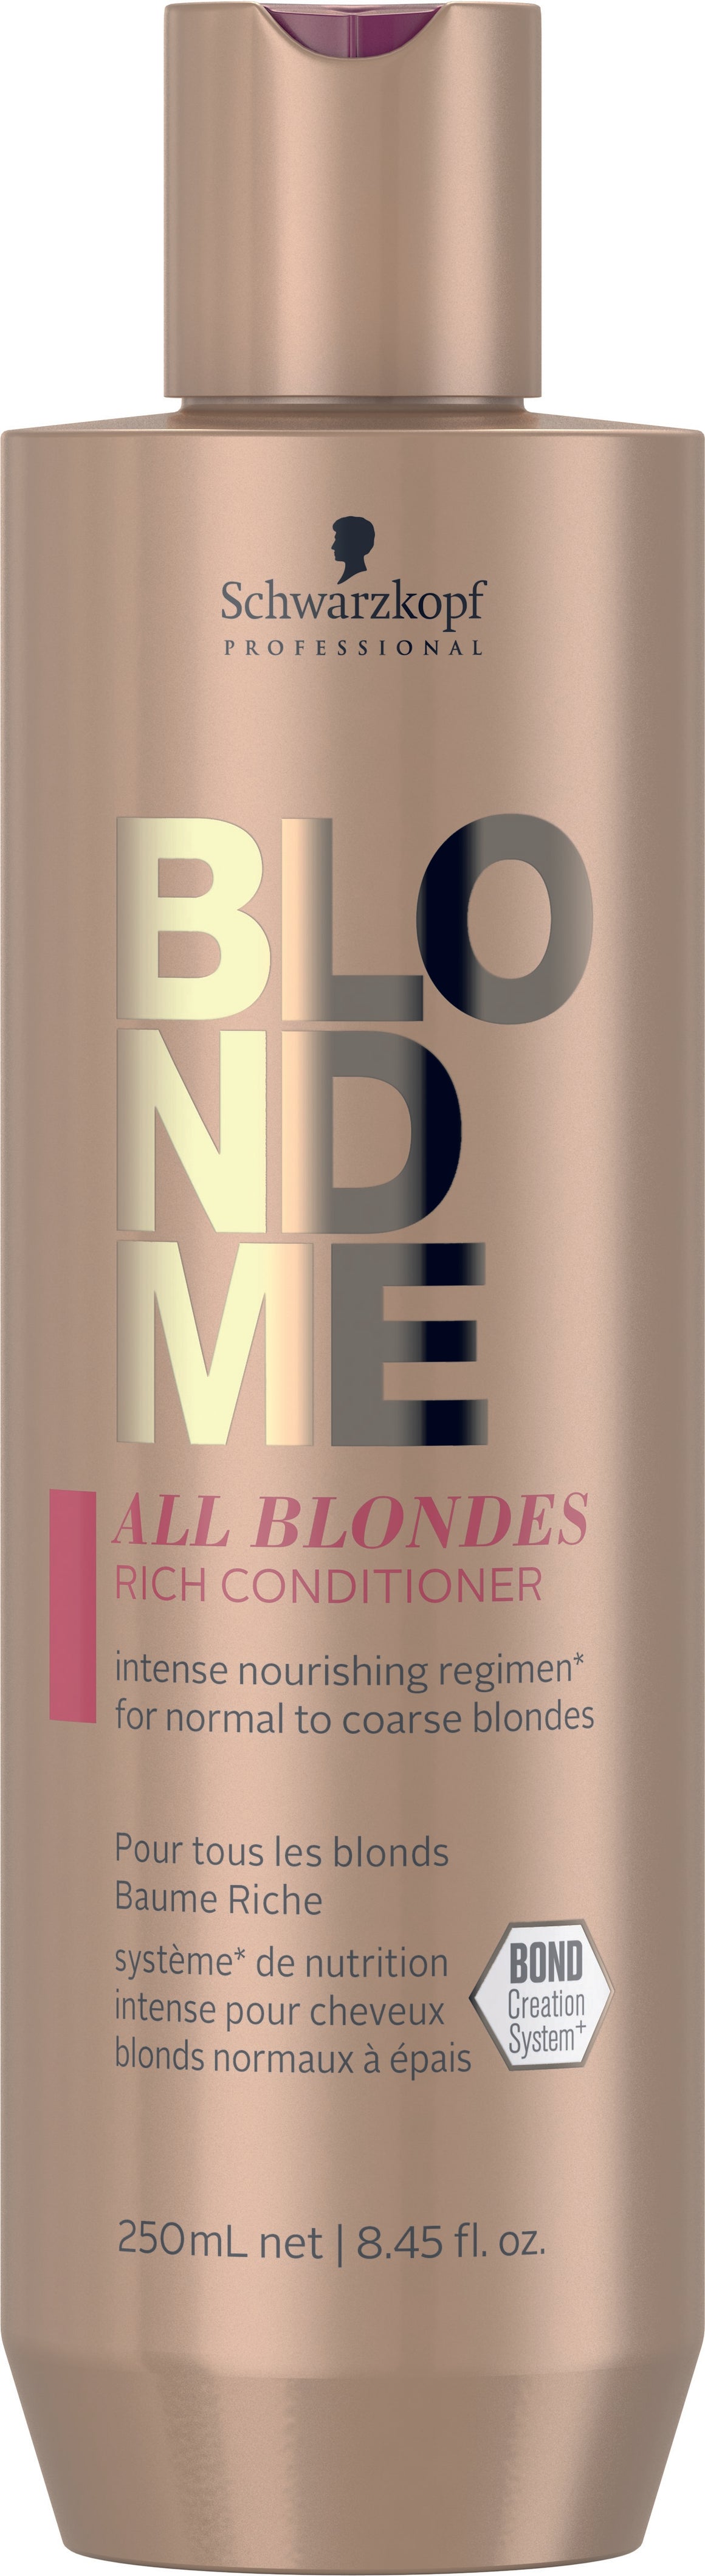 Schwarzkopf Professional BlondMe All Blondes Rich Conditioner 250ml at Eds Hair Bramhall